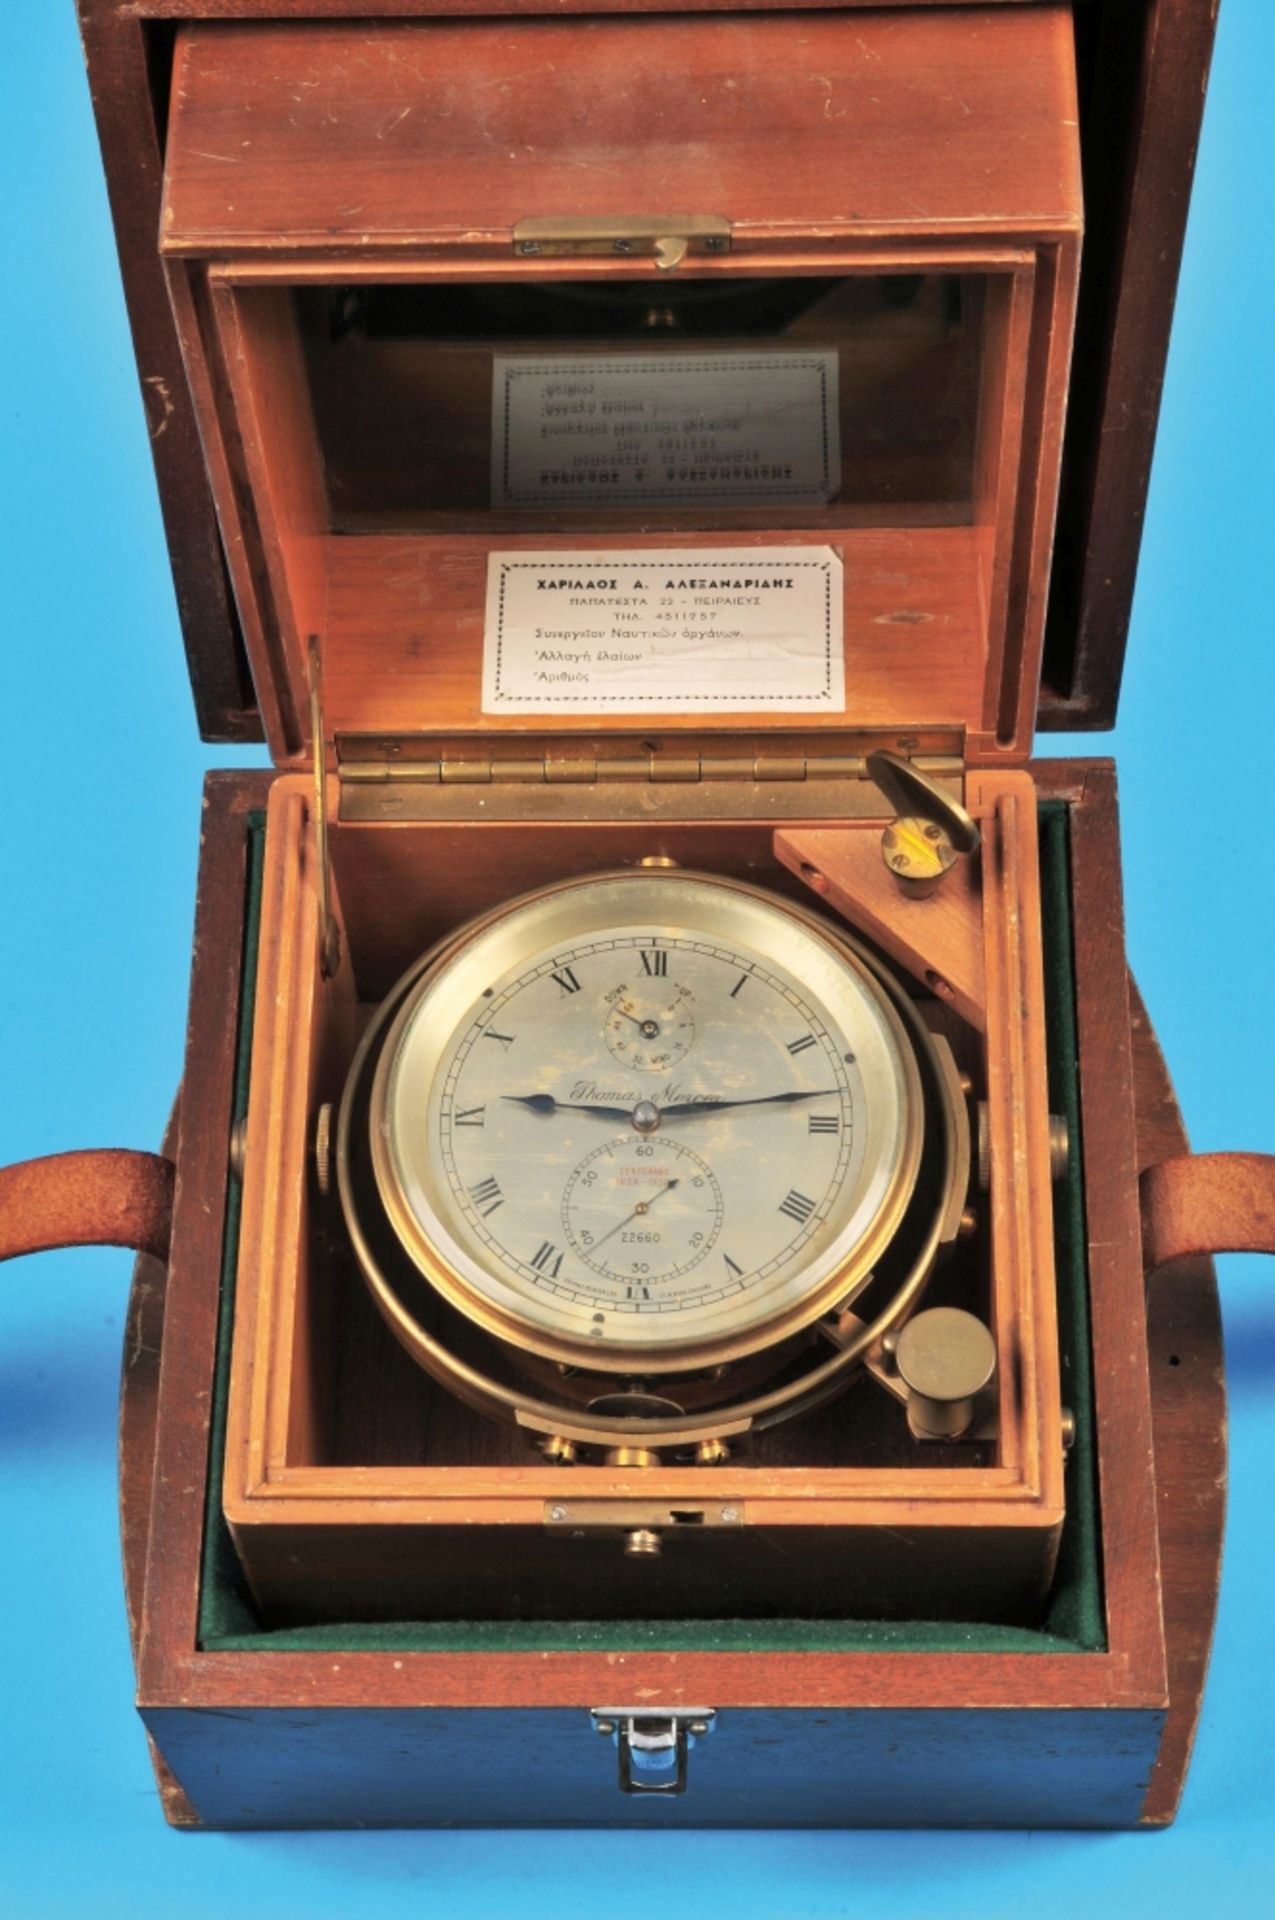 Thomas Mercer Ltd. marine chronometer, "Centenary 1858-1958", St. Albans.
England, No. 22660, with t